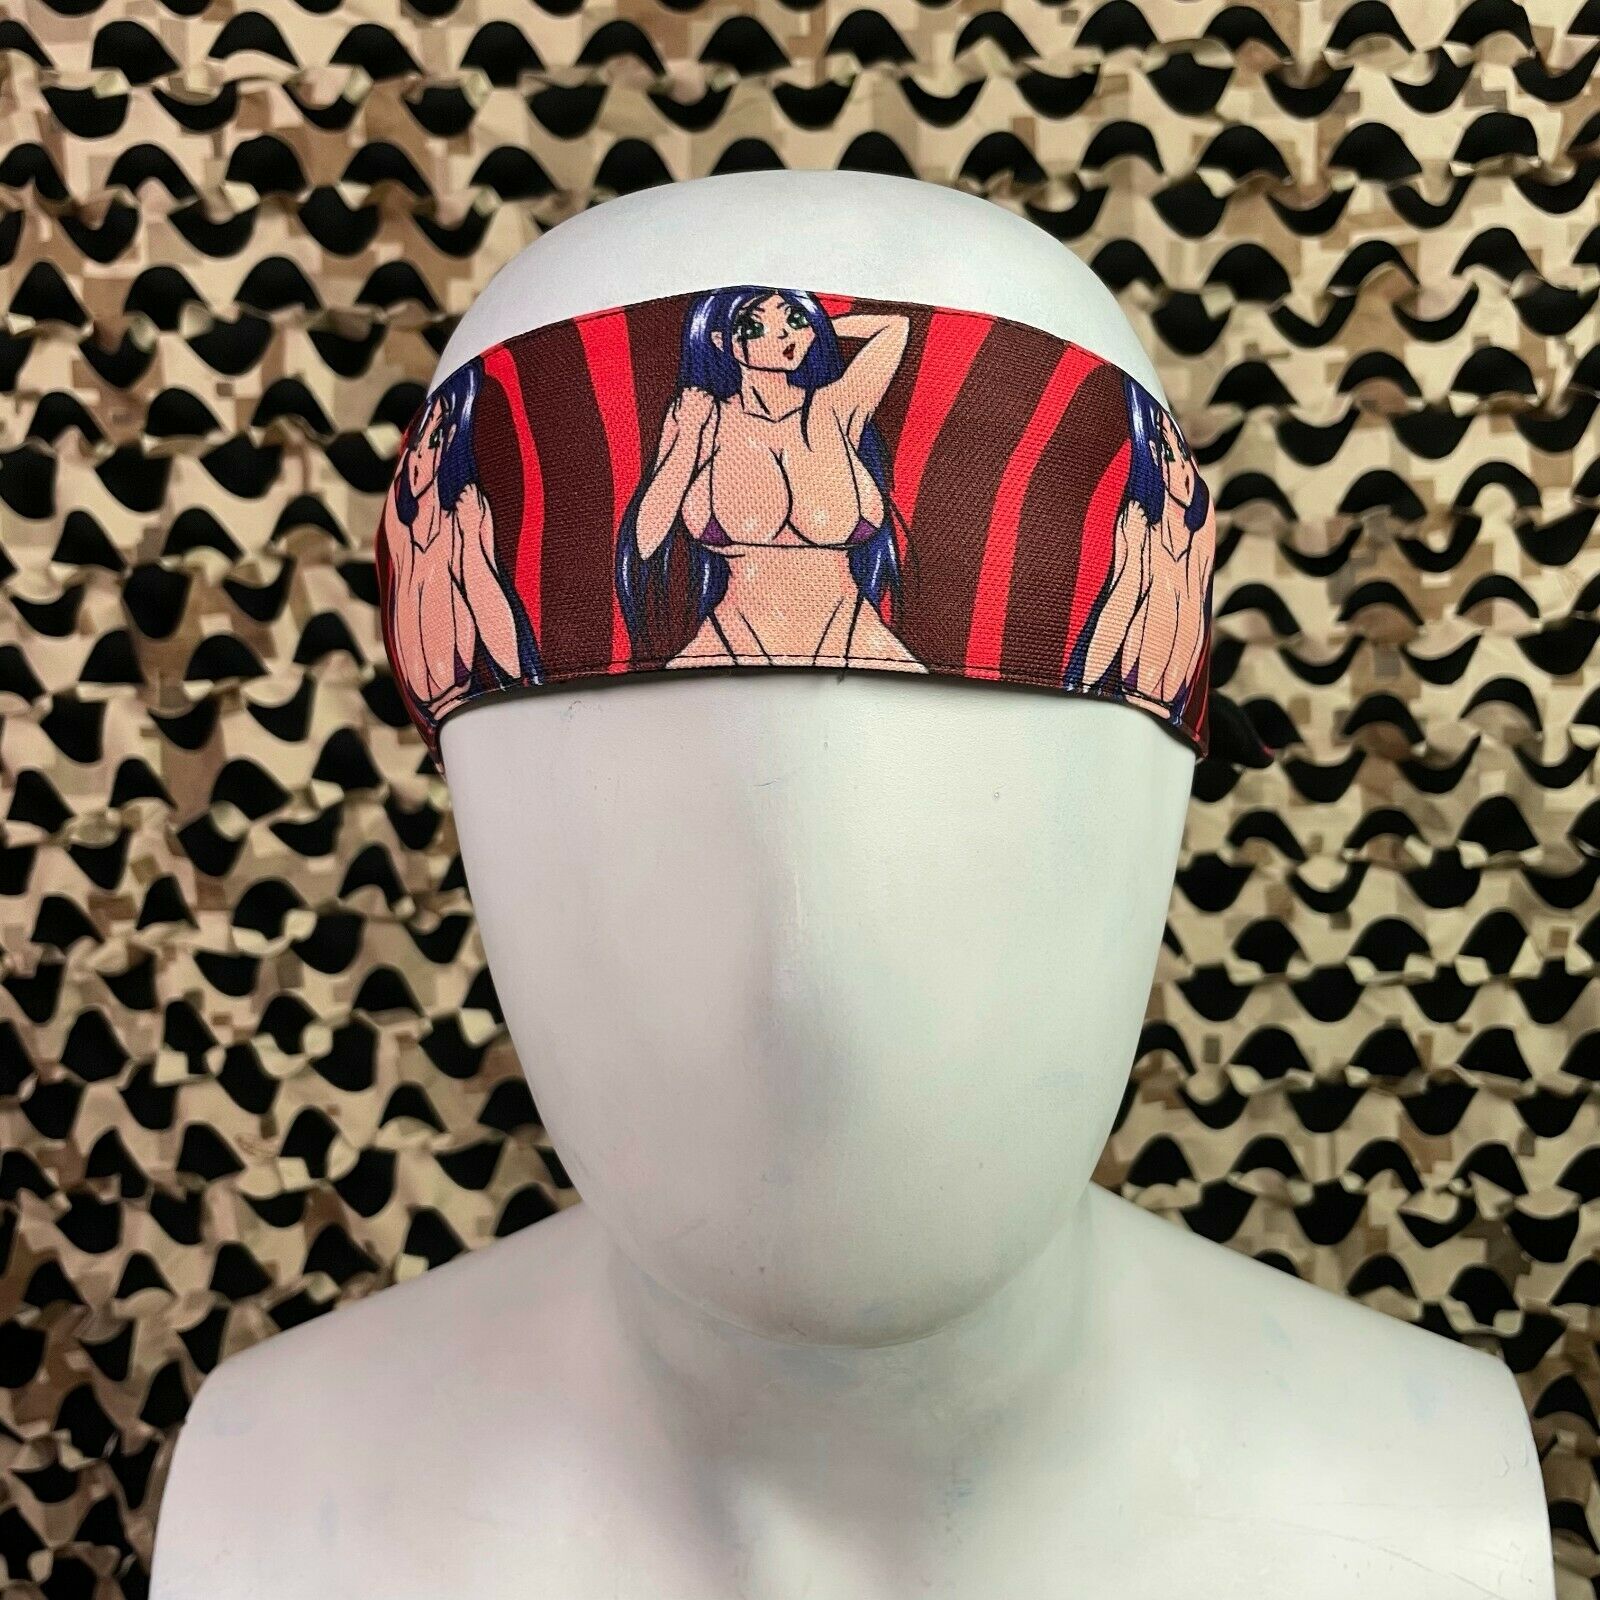 New Hk Army Headband - Beach Babe Red